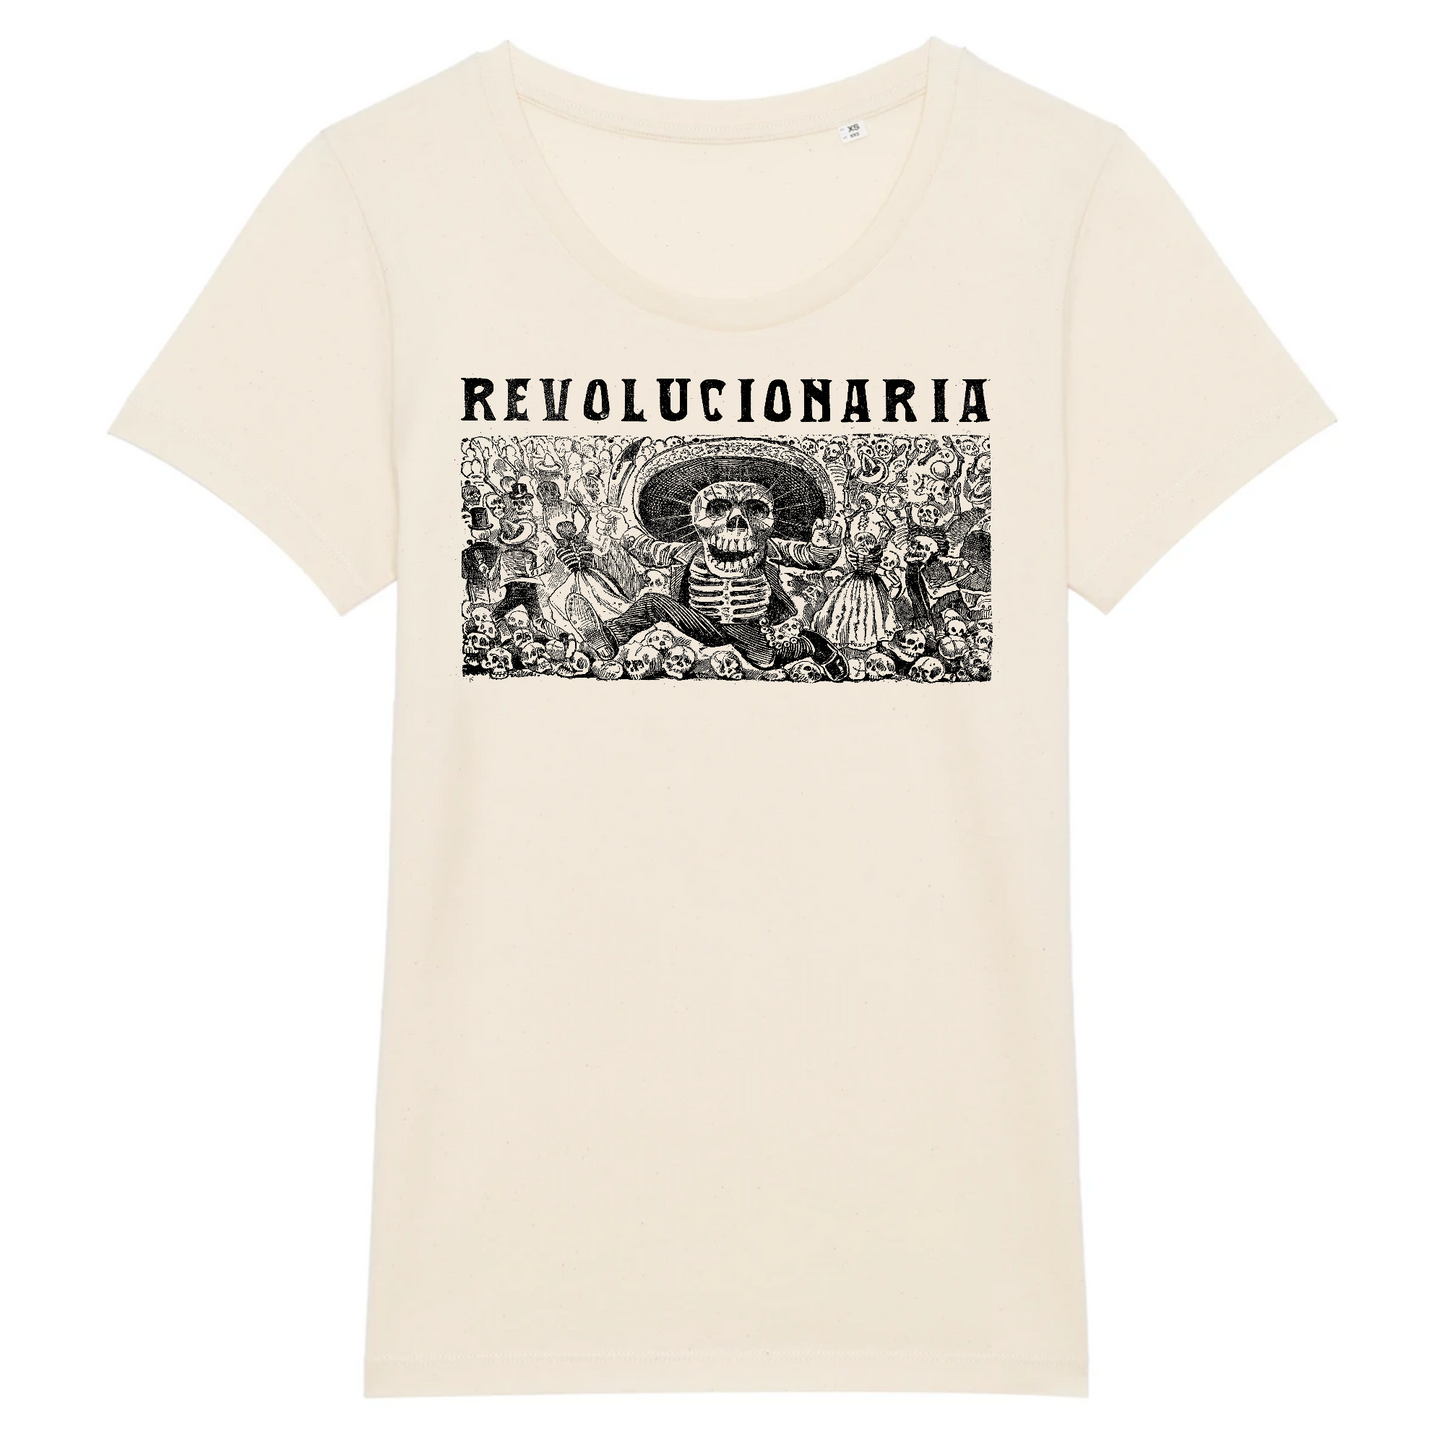 Calavera Revolutionaria - Organic Cotton Women's T-Shirt